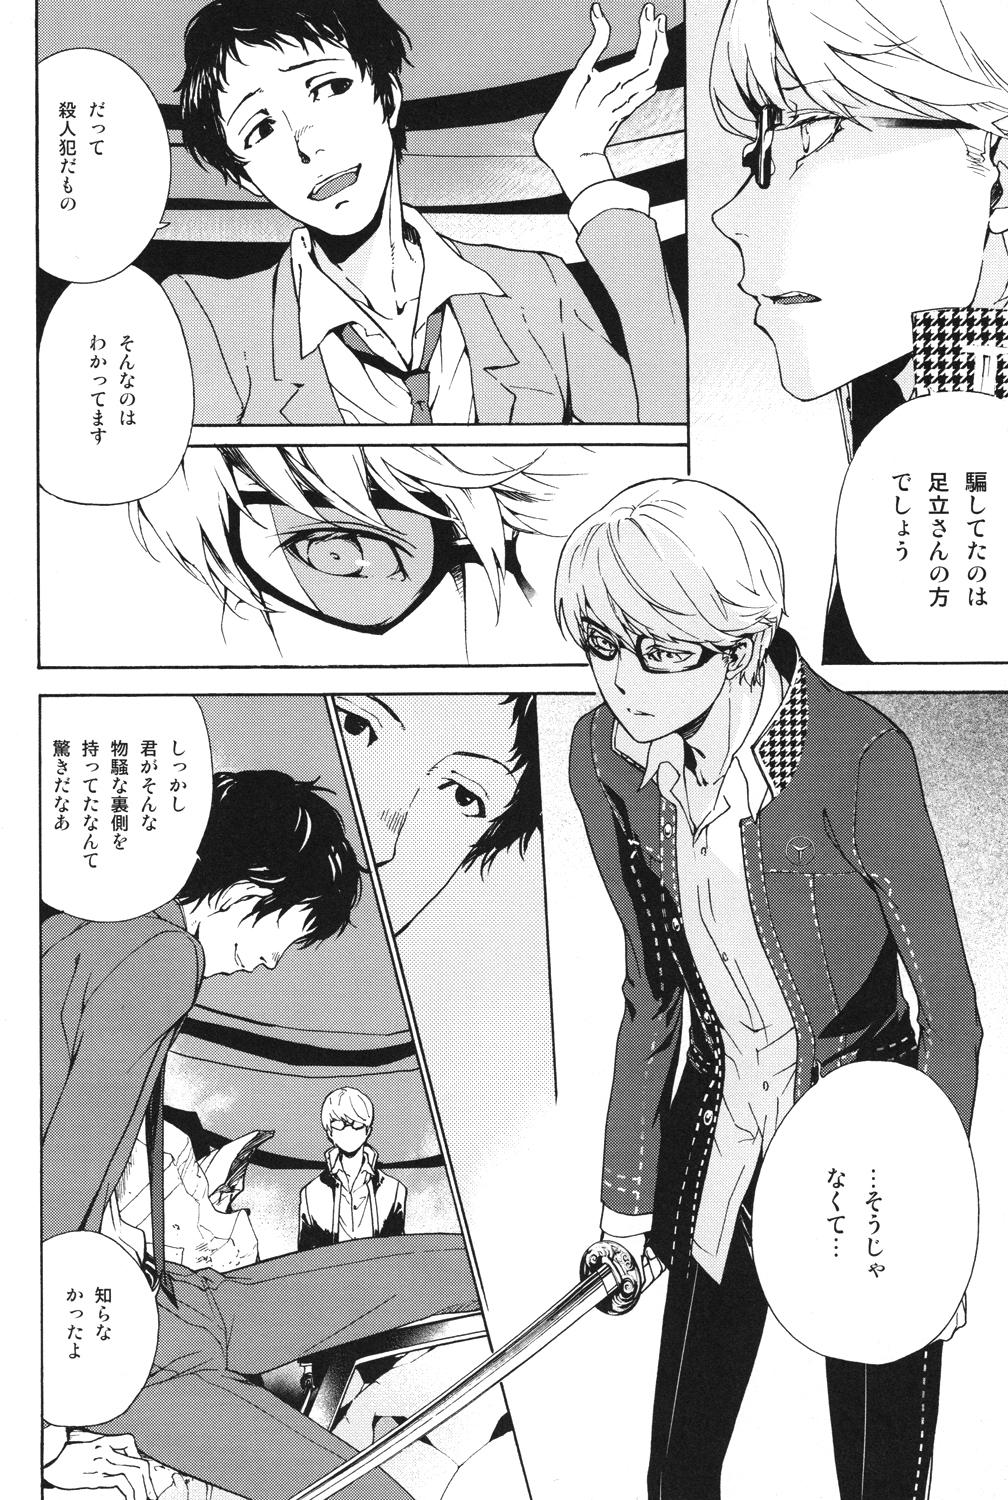 Reversecowgirl Utakata no Tsuki - Persona 4 Brother - Page 7